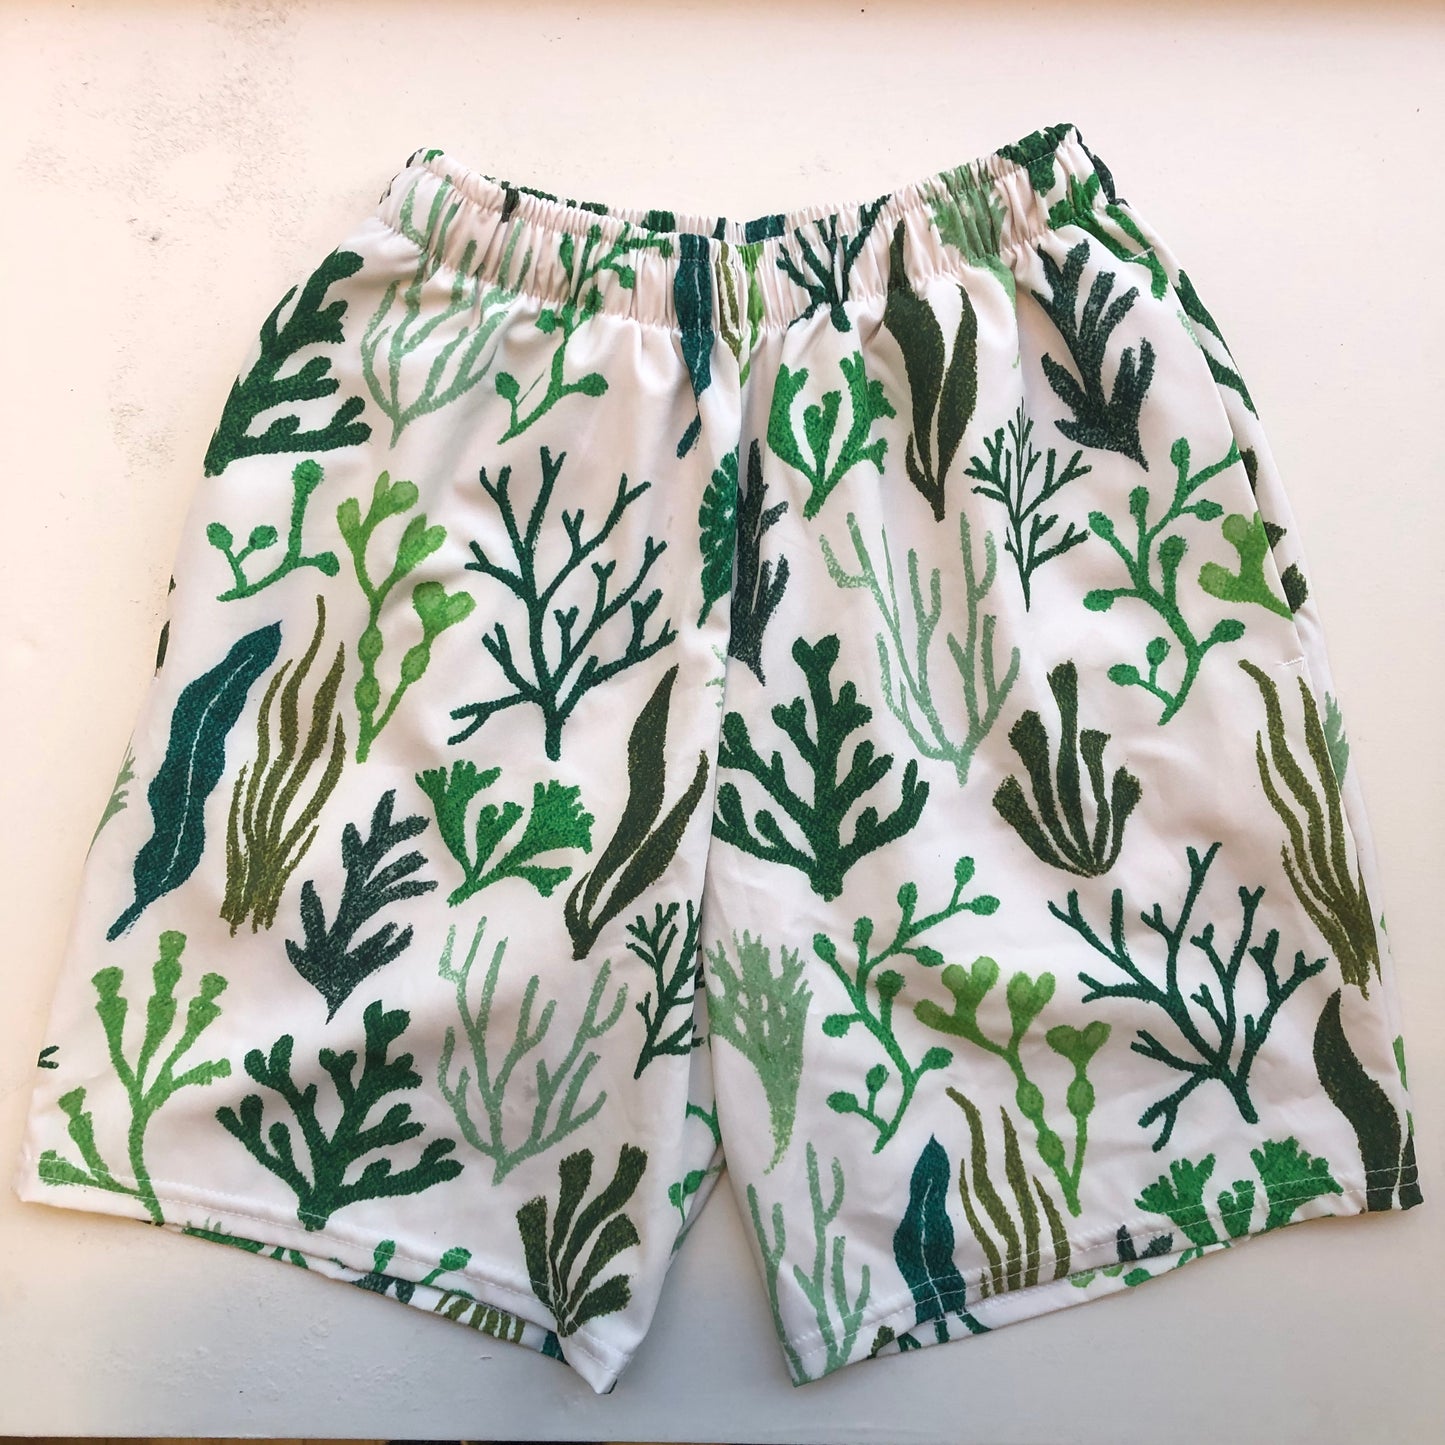 SALE - 'Seaweed' Men's Recycled Swim Shorts (XS)